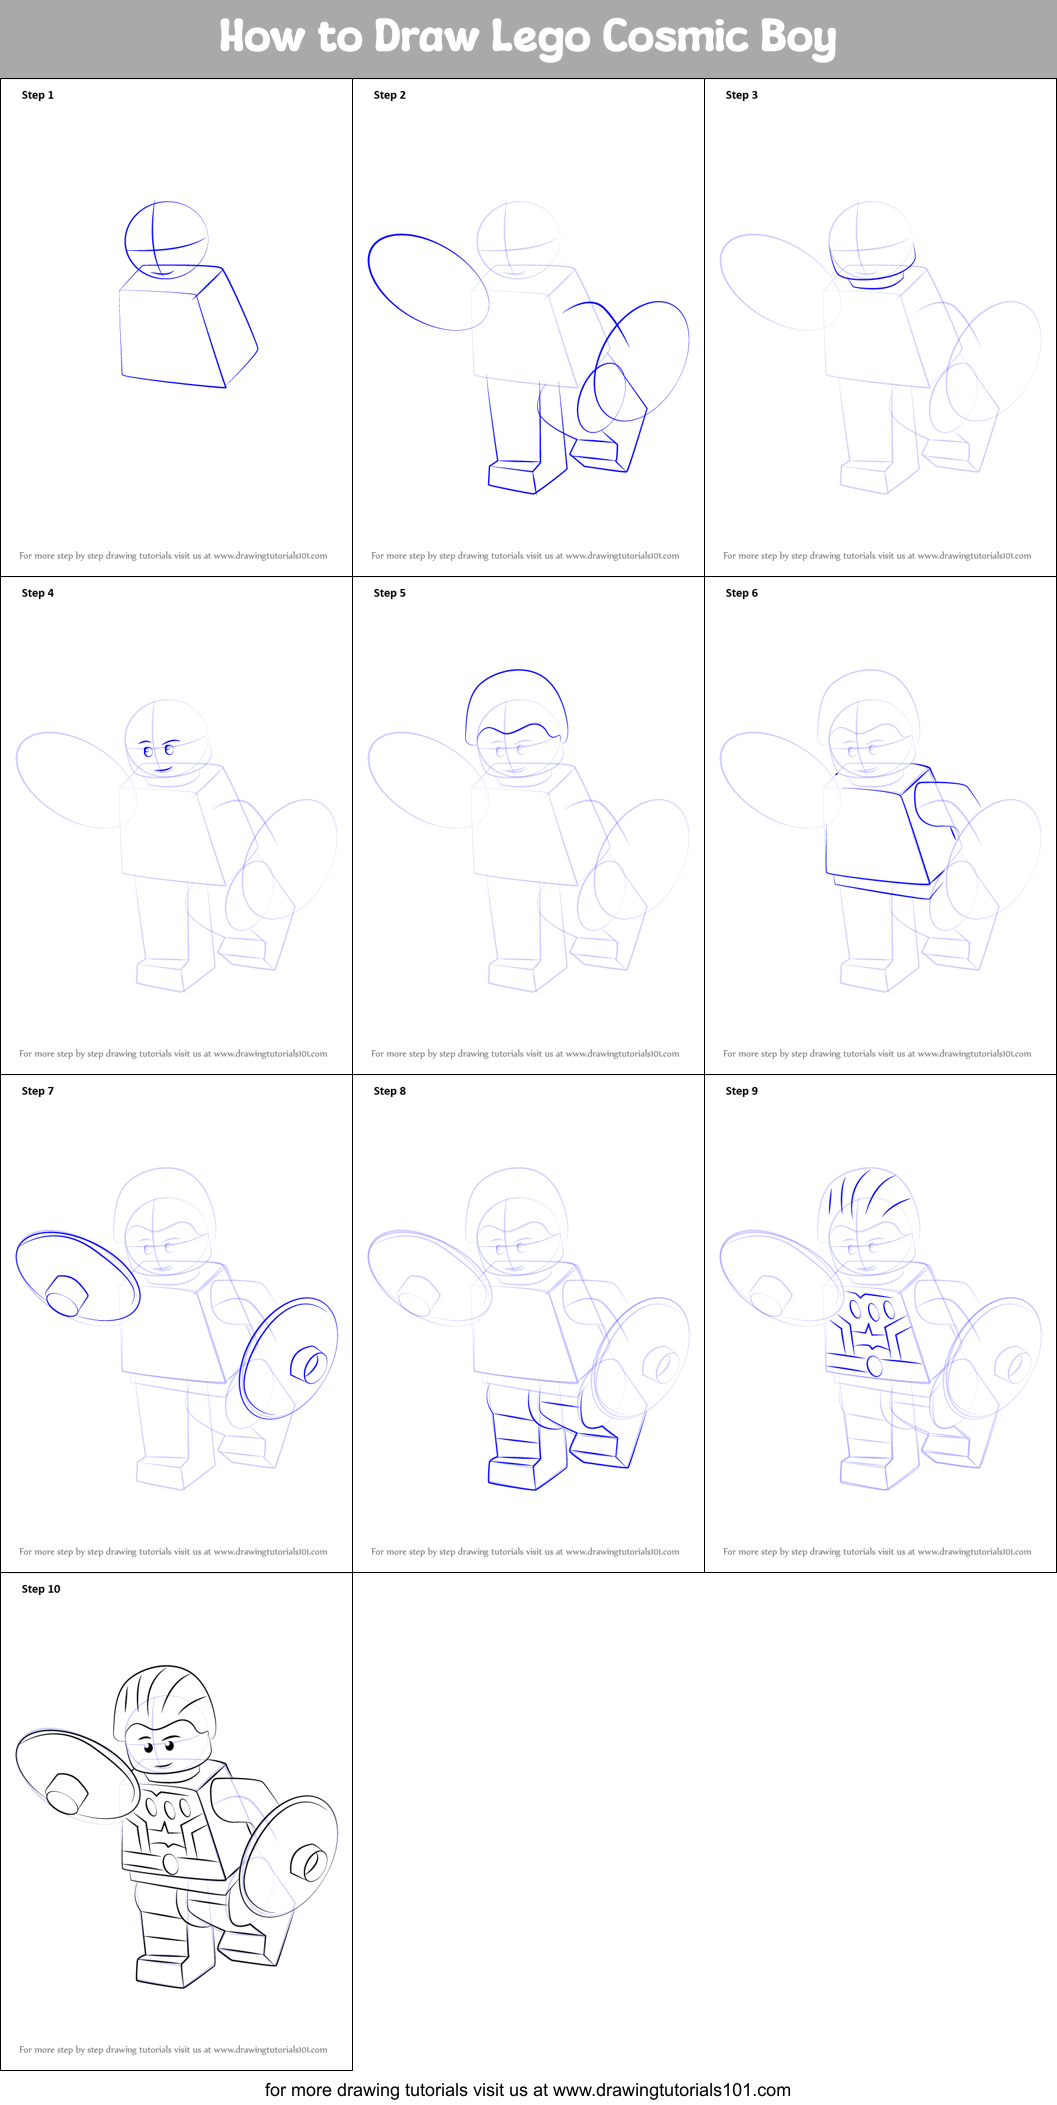 How to Draw Lego Cosmic Boy (Lego) Step by Step | DrawingTutorials101.com